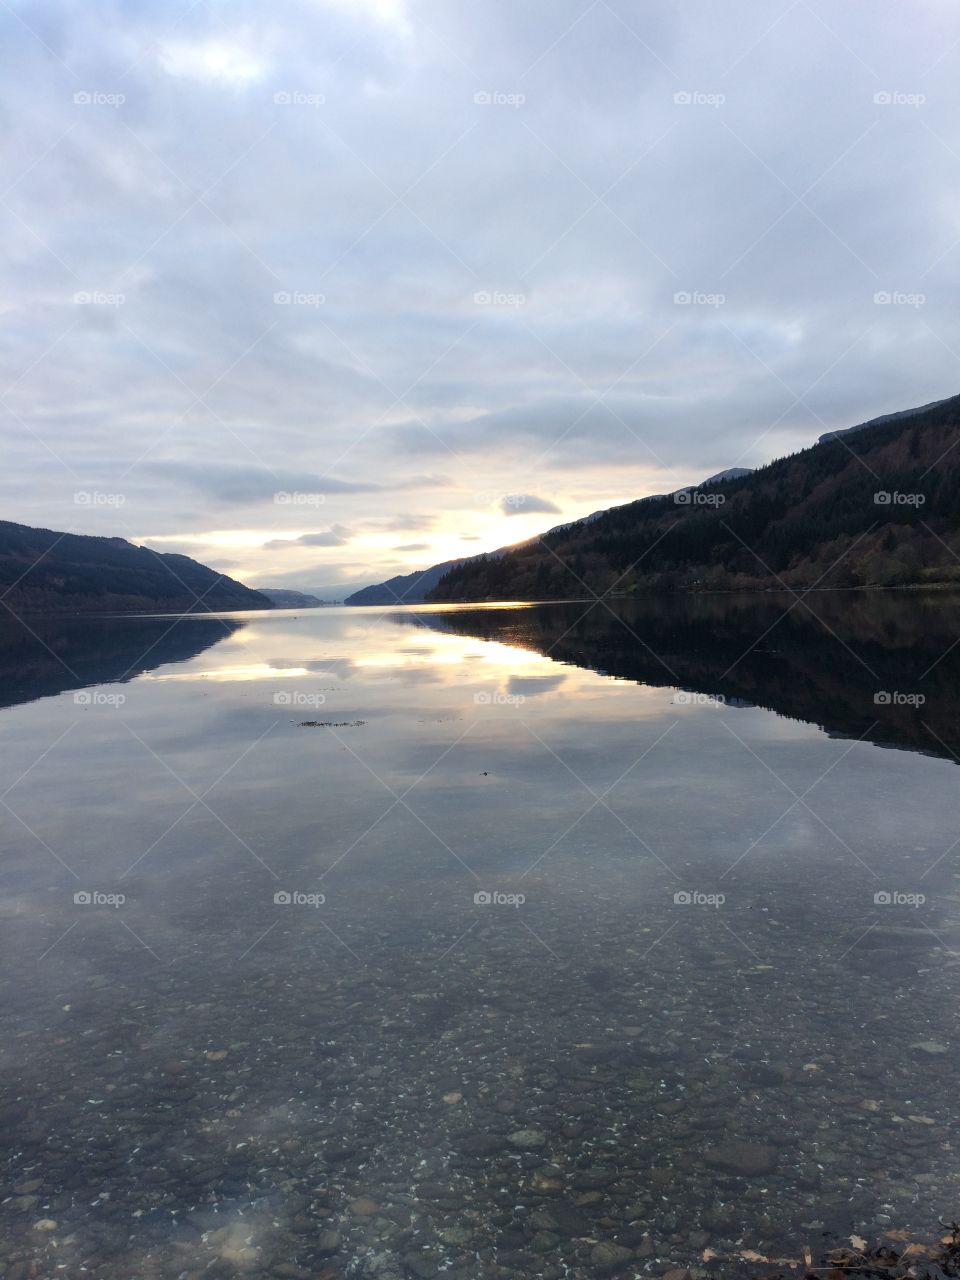 Loch long Scotland 